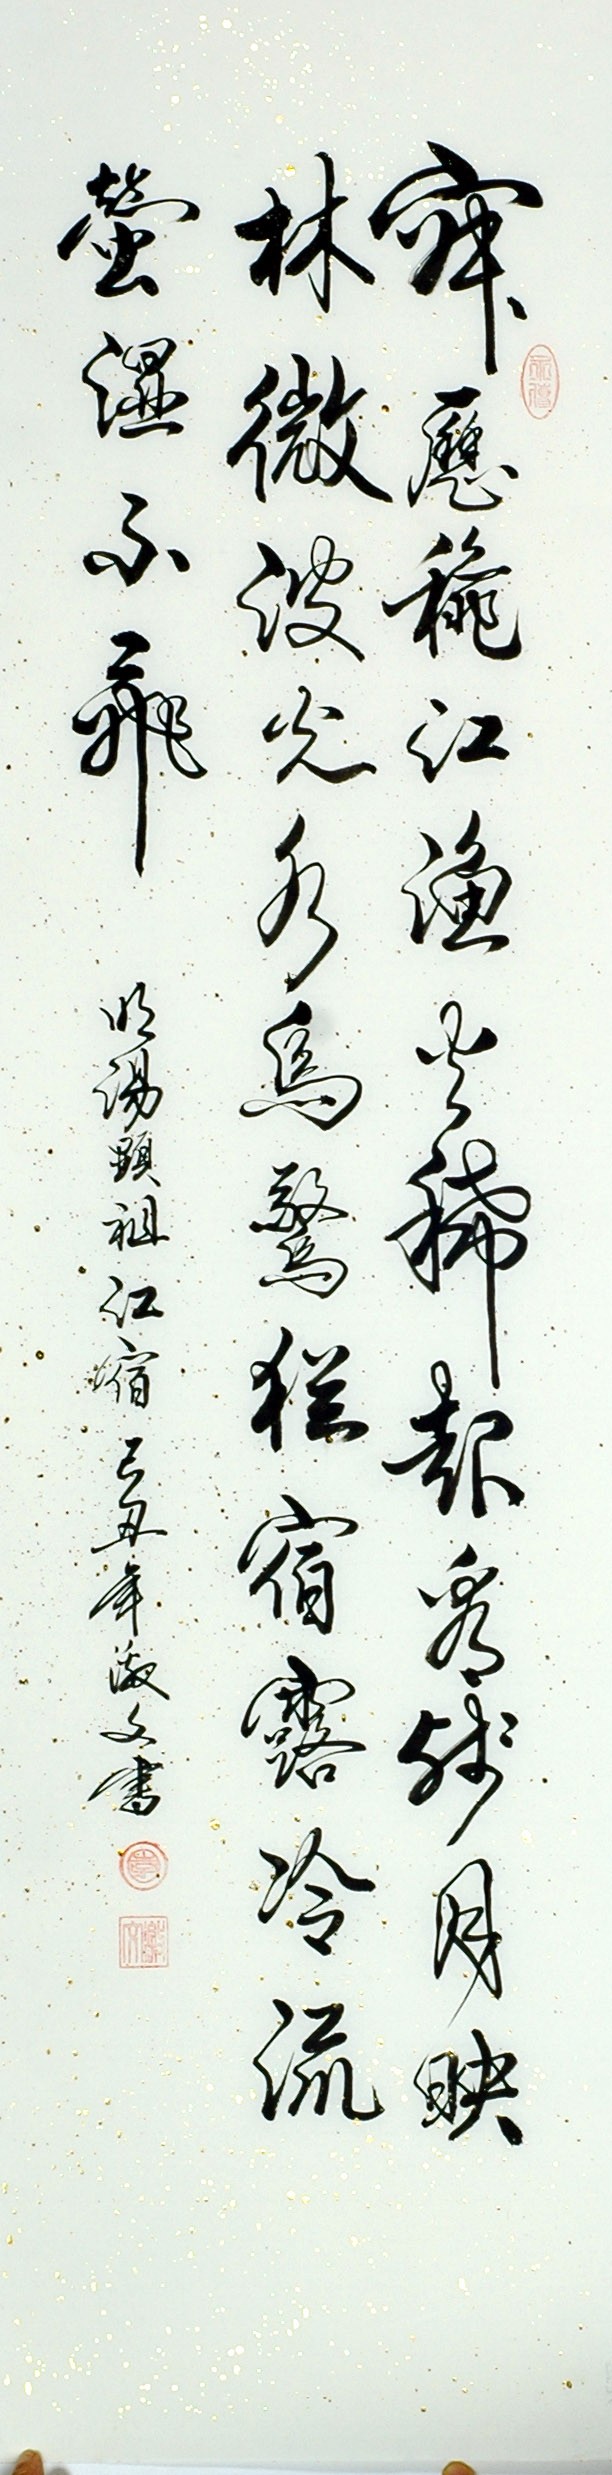 Chinese Cursive Scripts Painting - CNAG010997